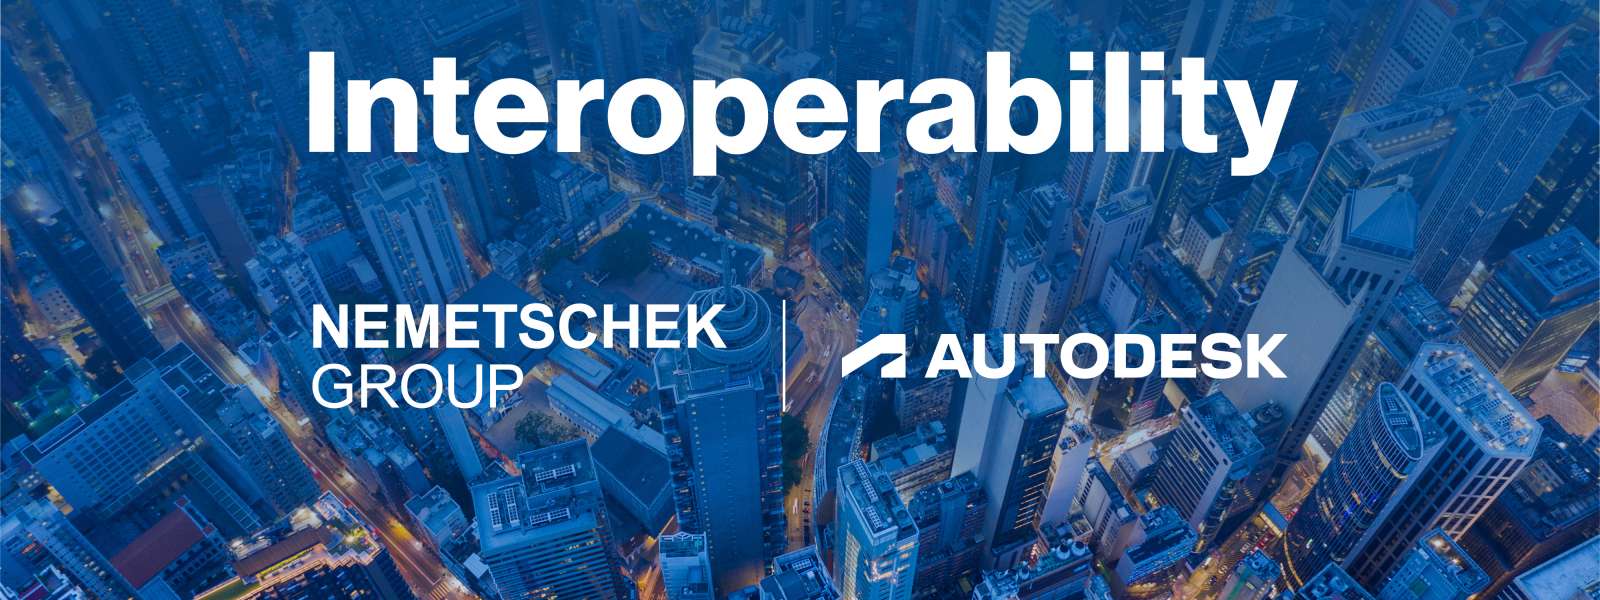 Building Better Together: Nemetschek and Autodesk’s Interoperability Agreement